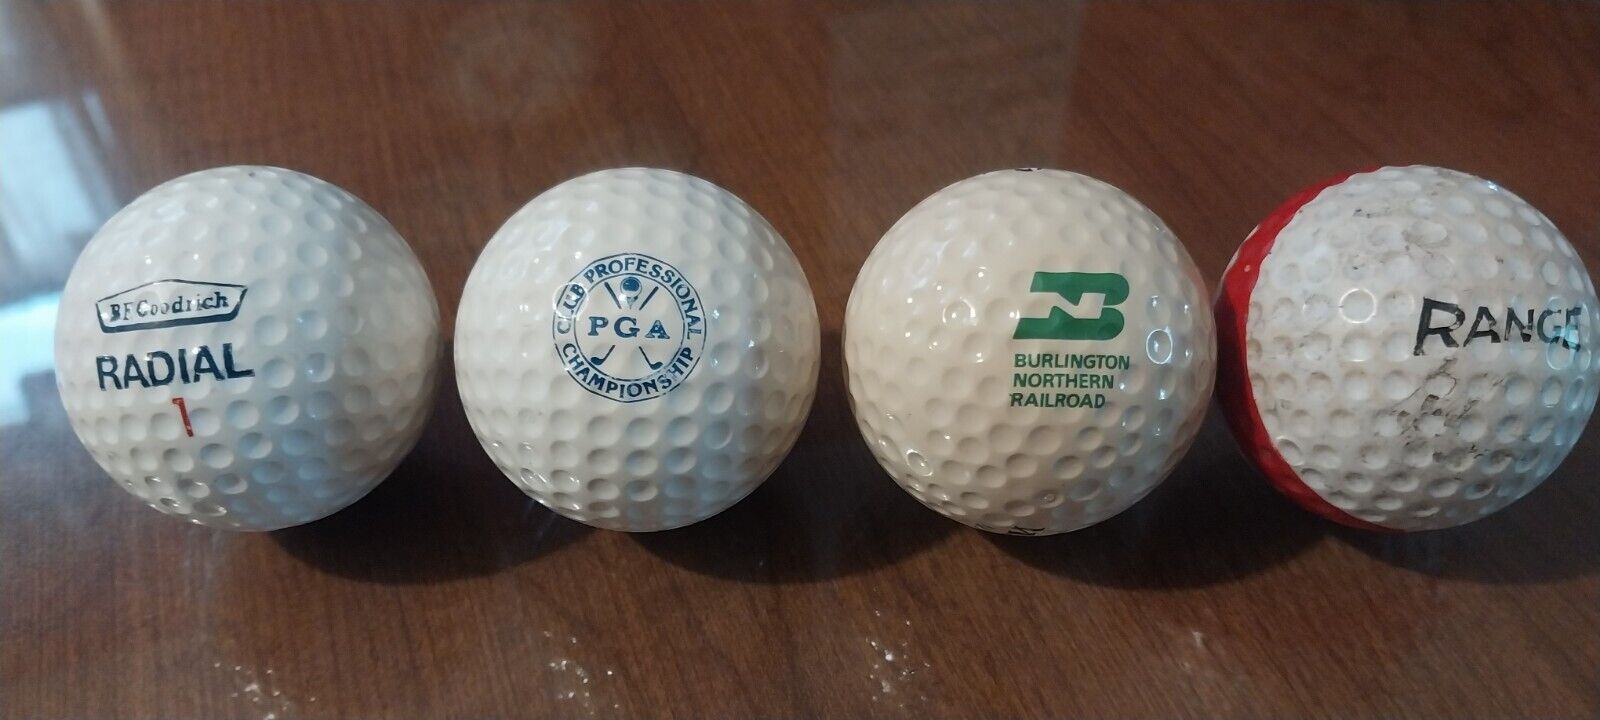 4 Antique Golf Balls BN Railway, PGA, BF Goodrich & Range Taste of the Past